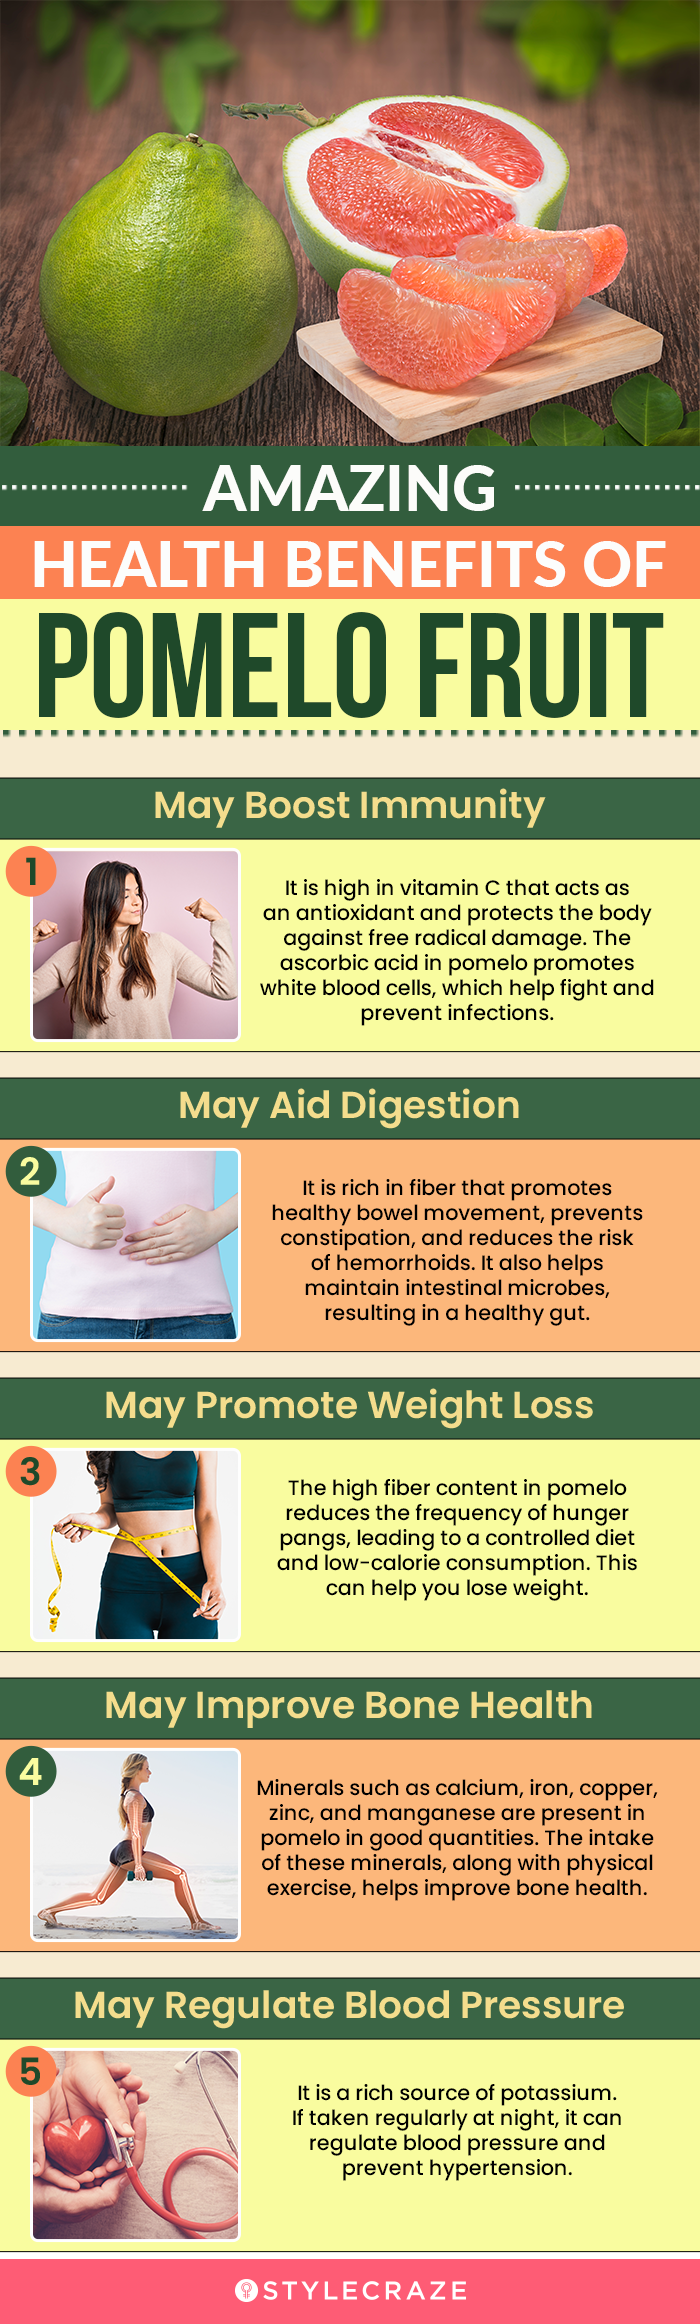 amazing health benefits of pomelo fruit (infographic)